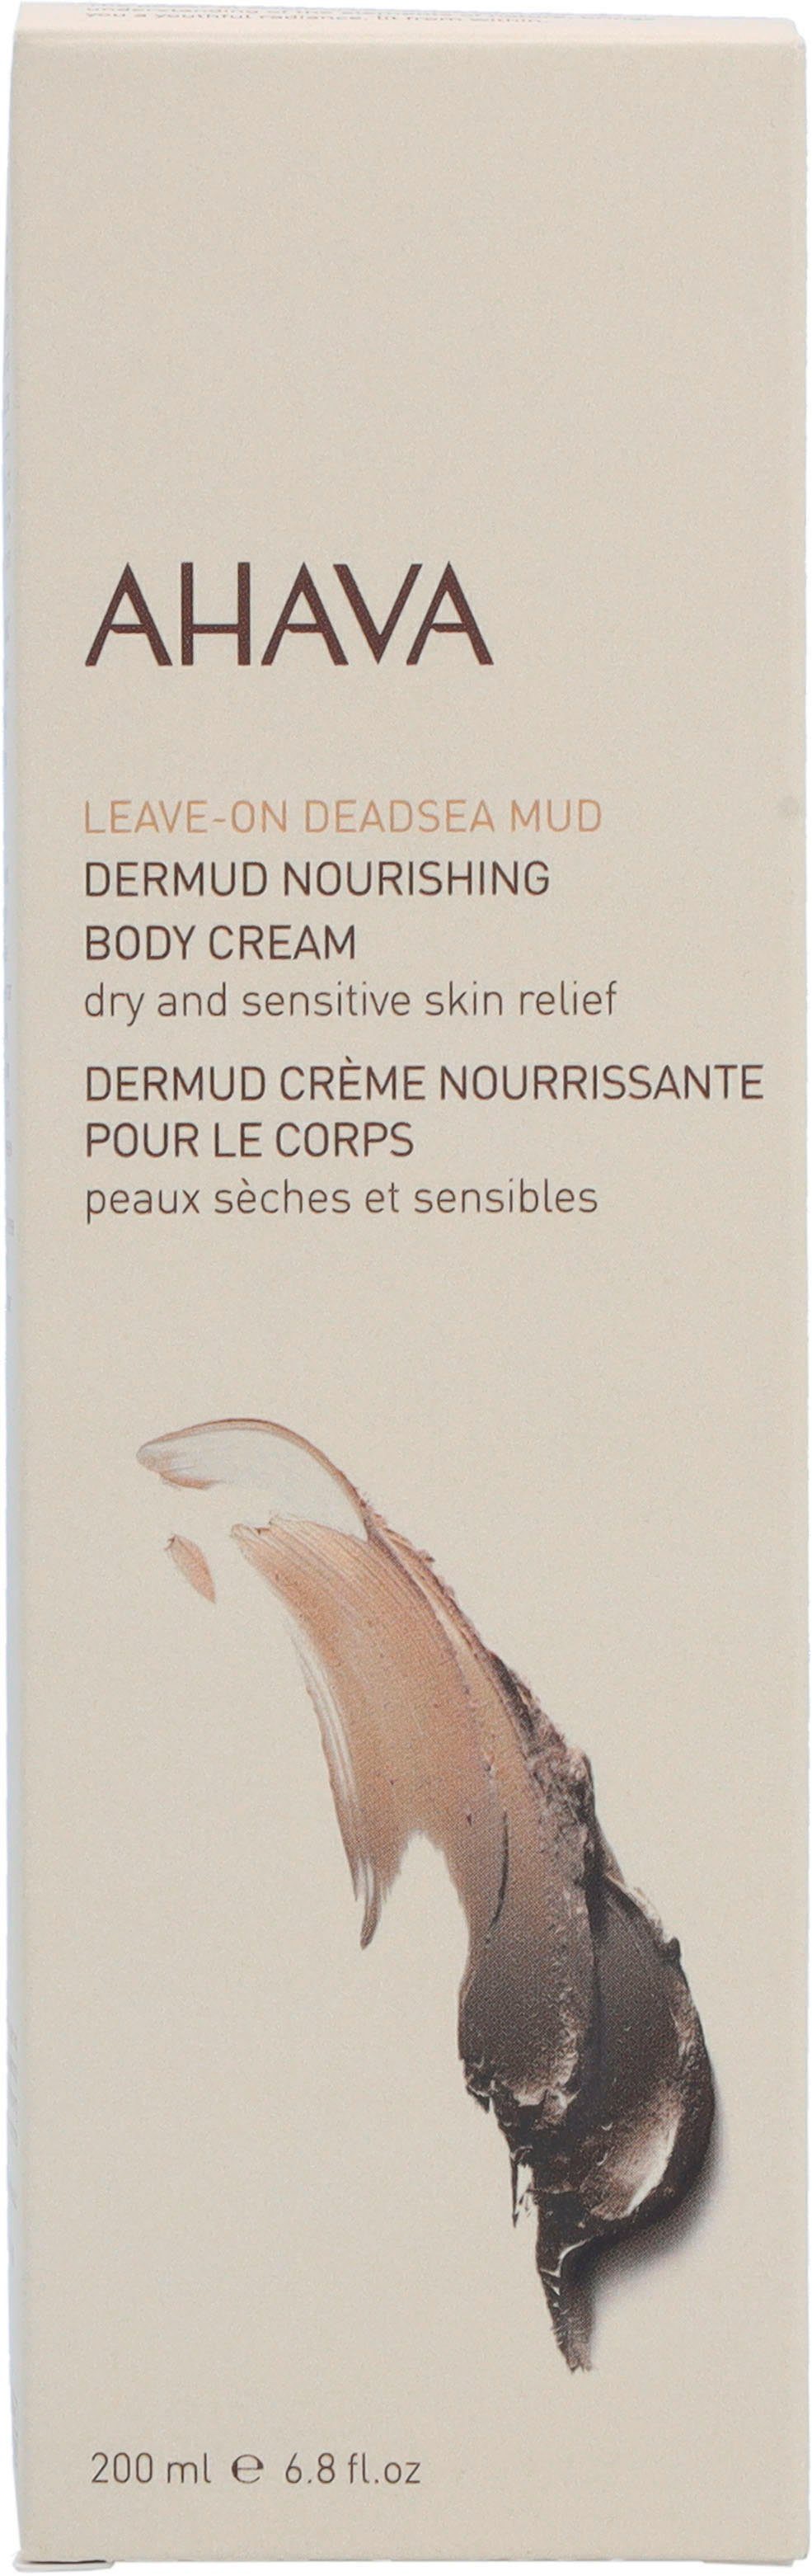 Nourishing AHAVA Body Deadsea Körpercreme Mud Cream Dermud